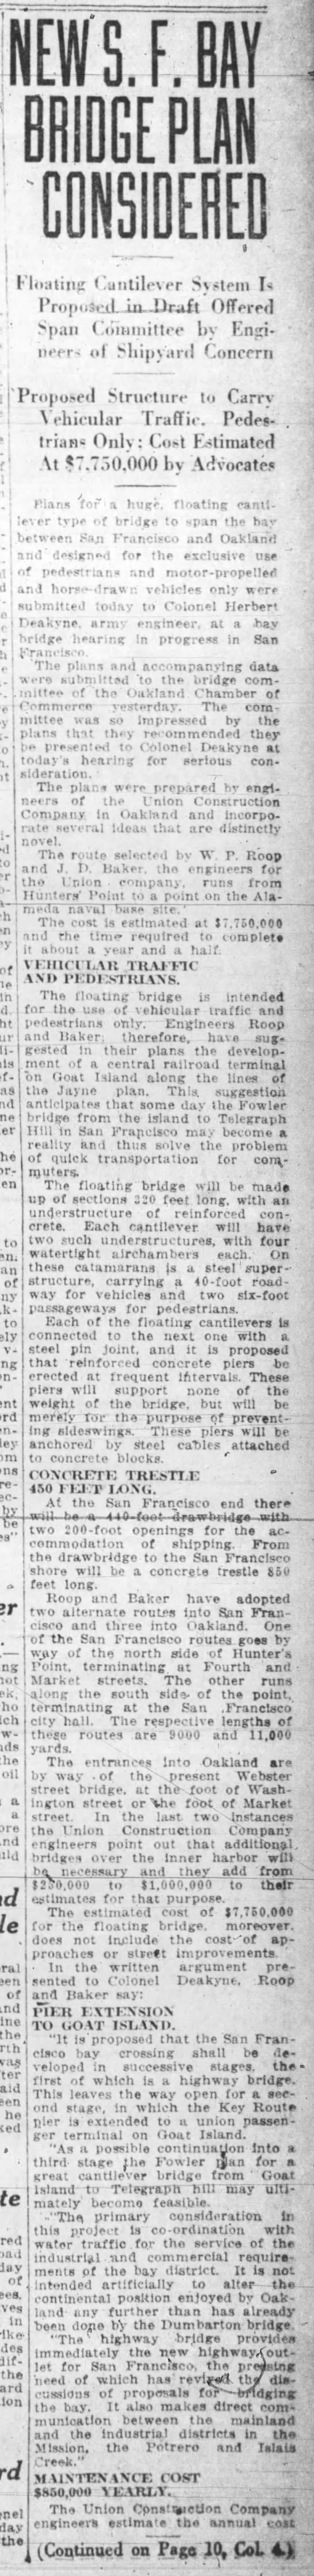 plans for floating bridge (p1) - 